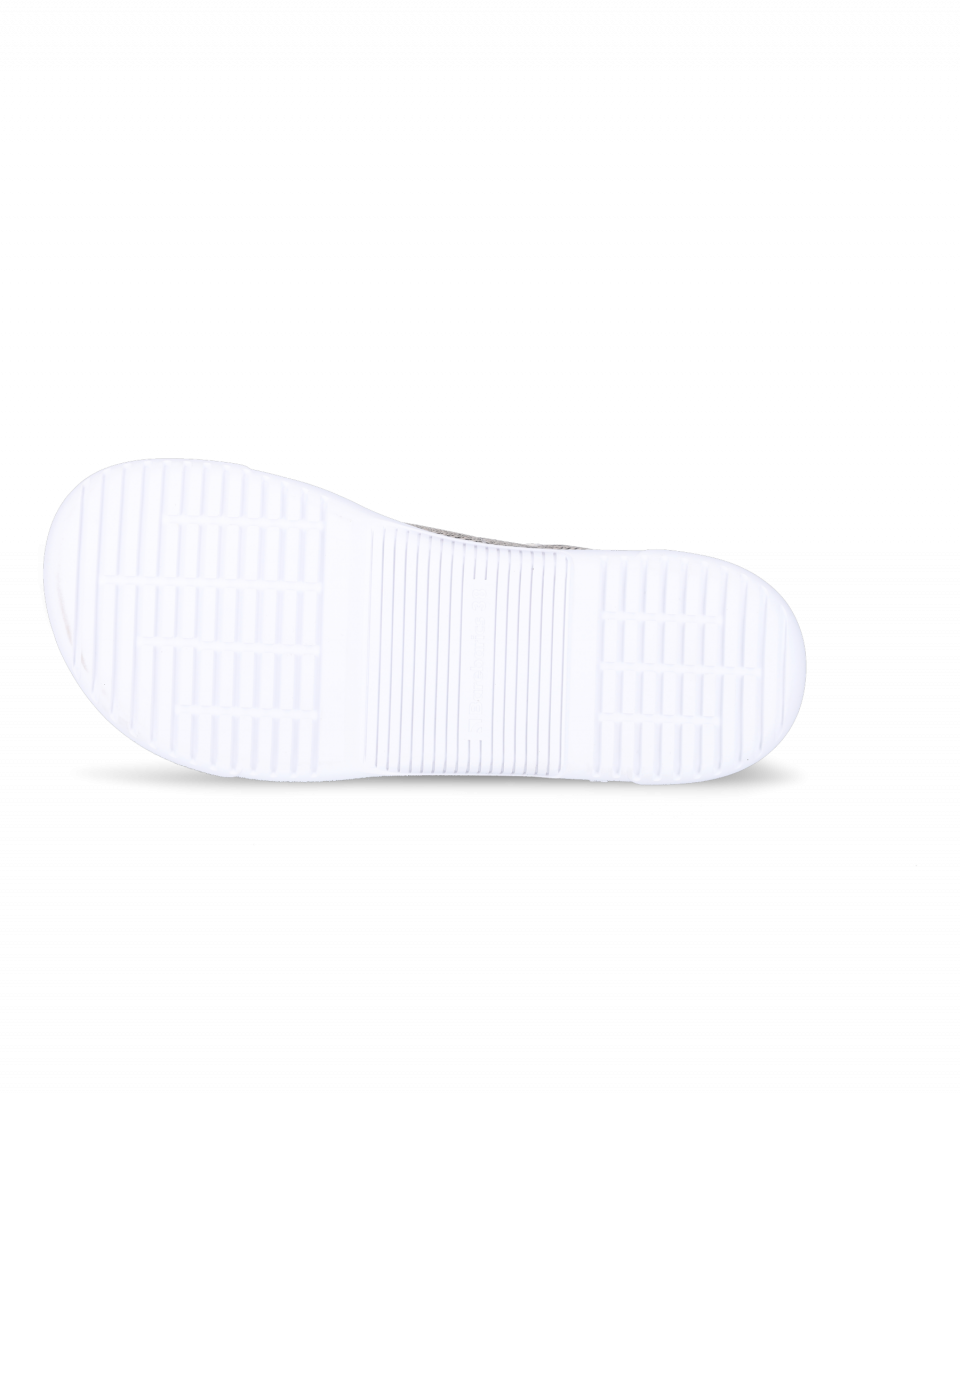 Barefoot Sneakers Barebarics - Axiom - Brown & White